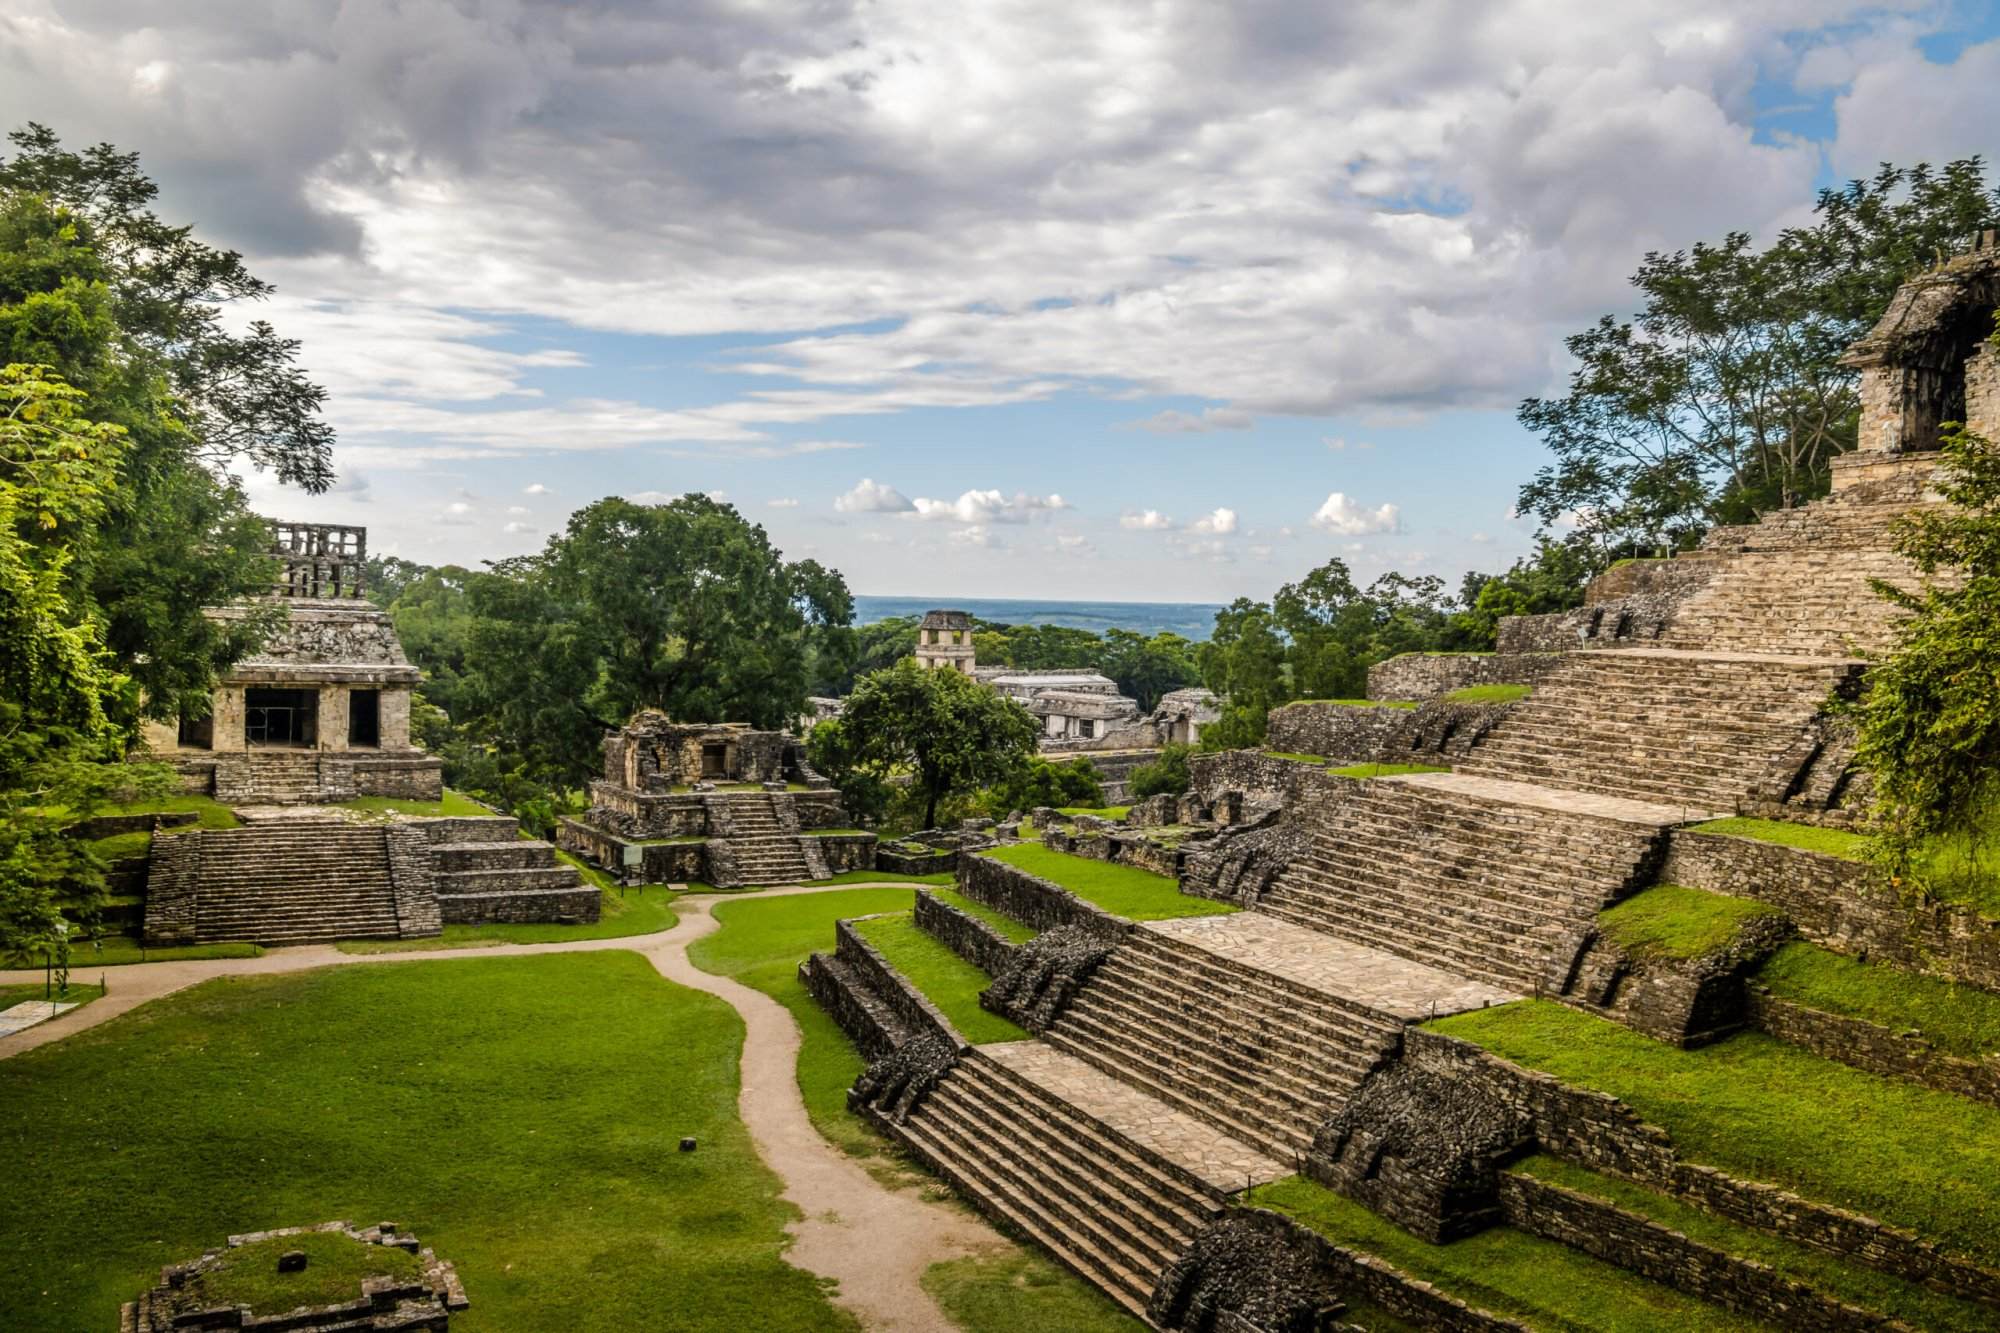 The ruins of tikal, mexico.